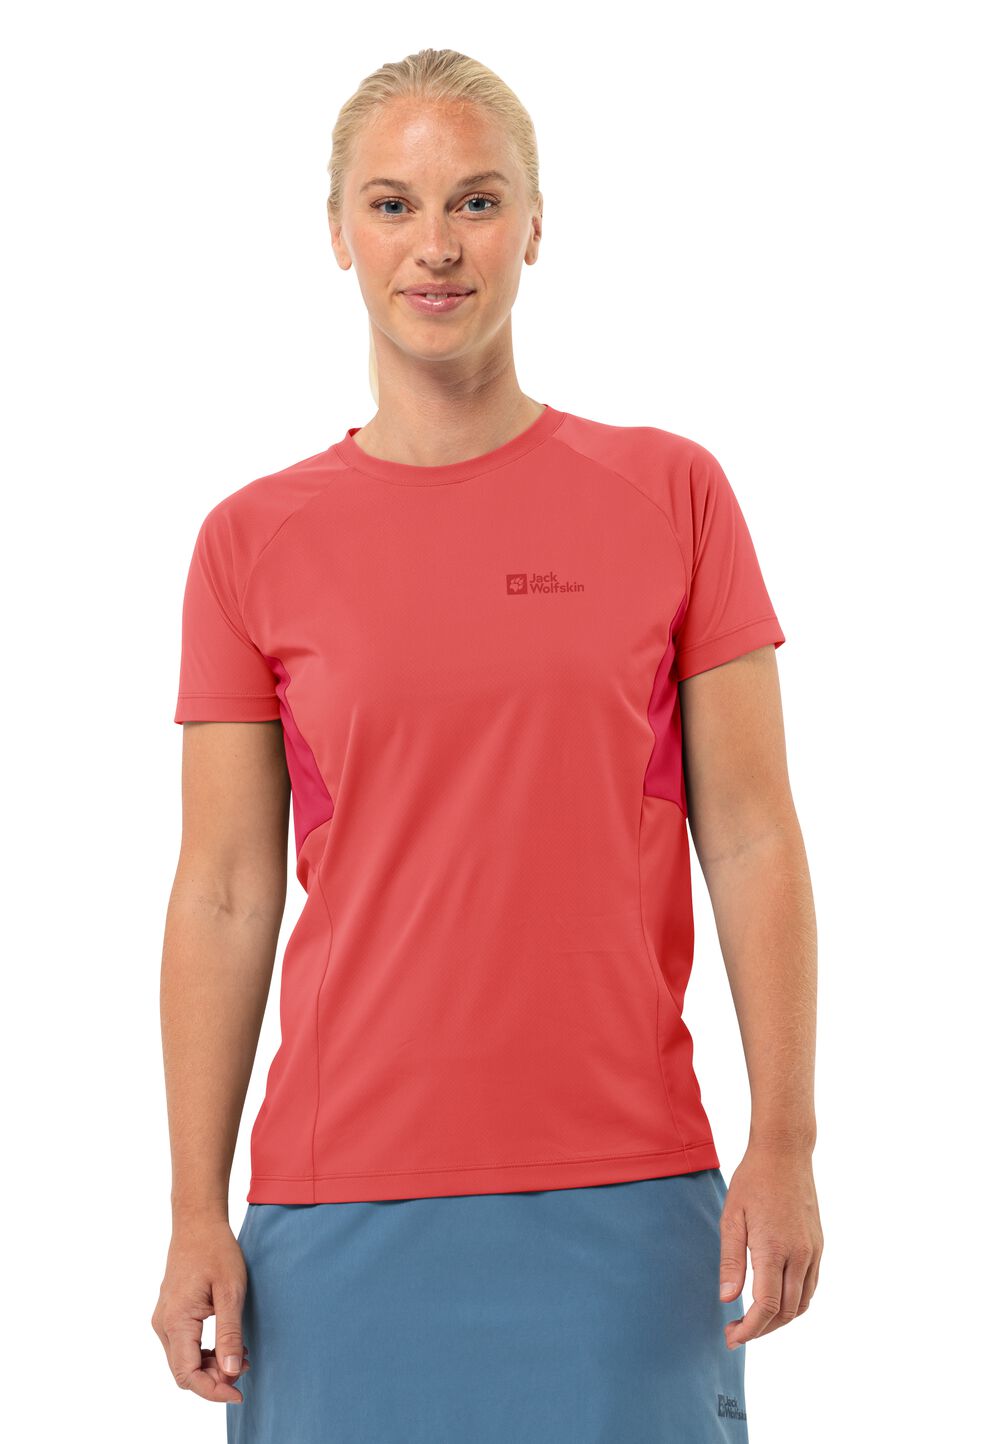 Jack Wolfskin Narrows T-Shirt Women Functioneel shirt Dames XL rood vibrant red